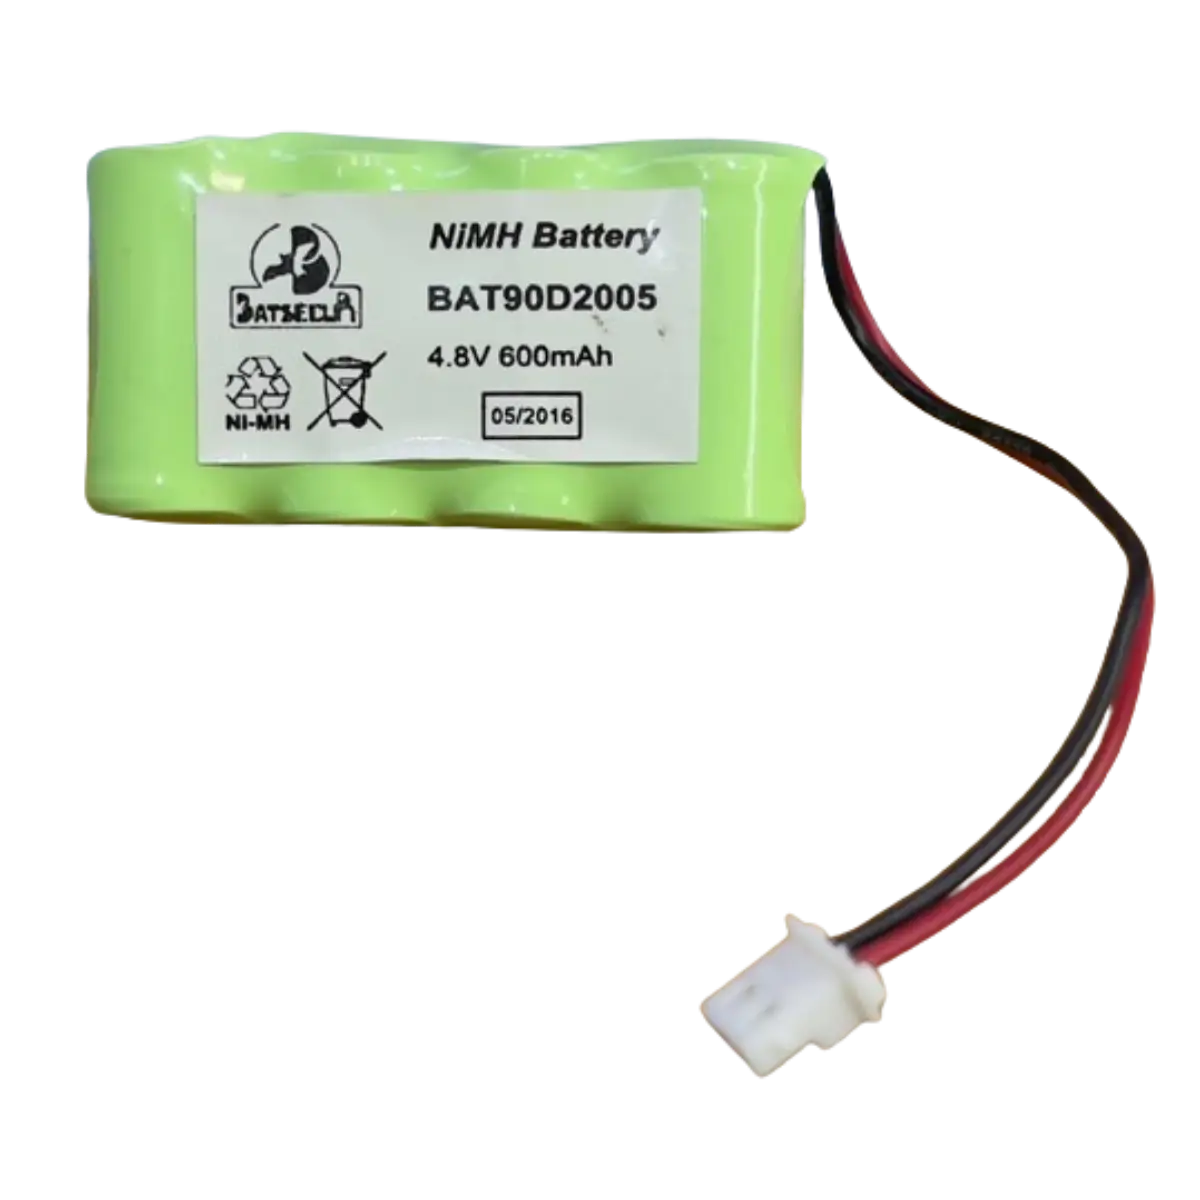 Batterie BAT90D2005 4.8V 600mAh